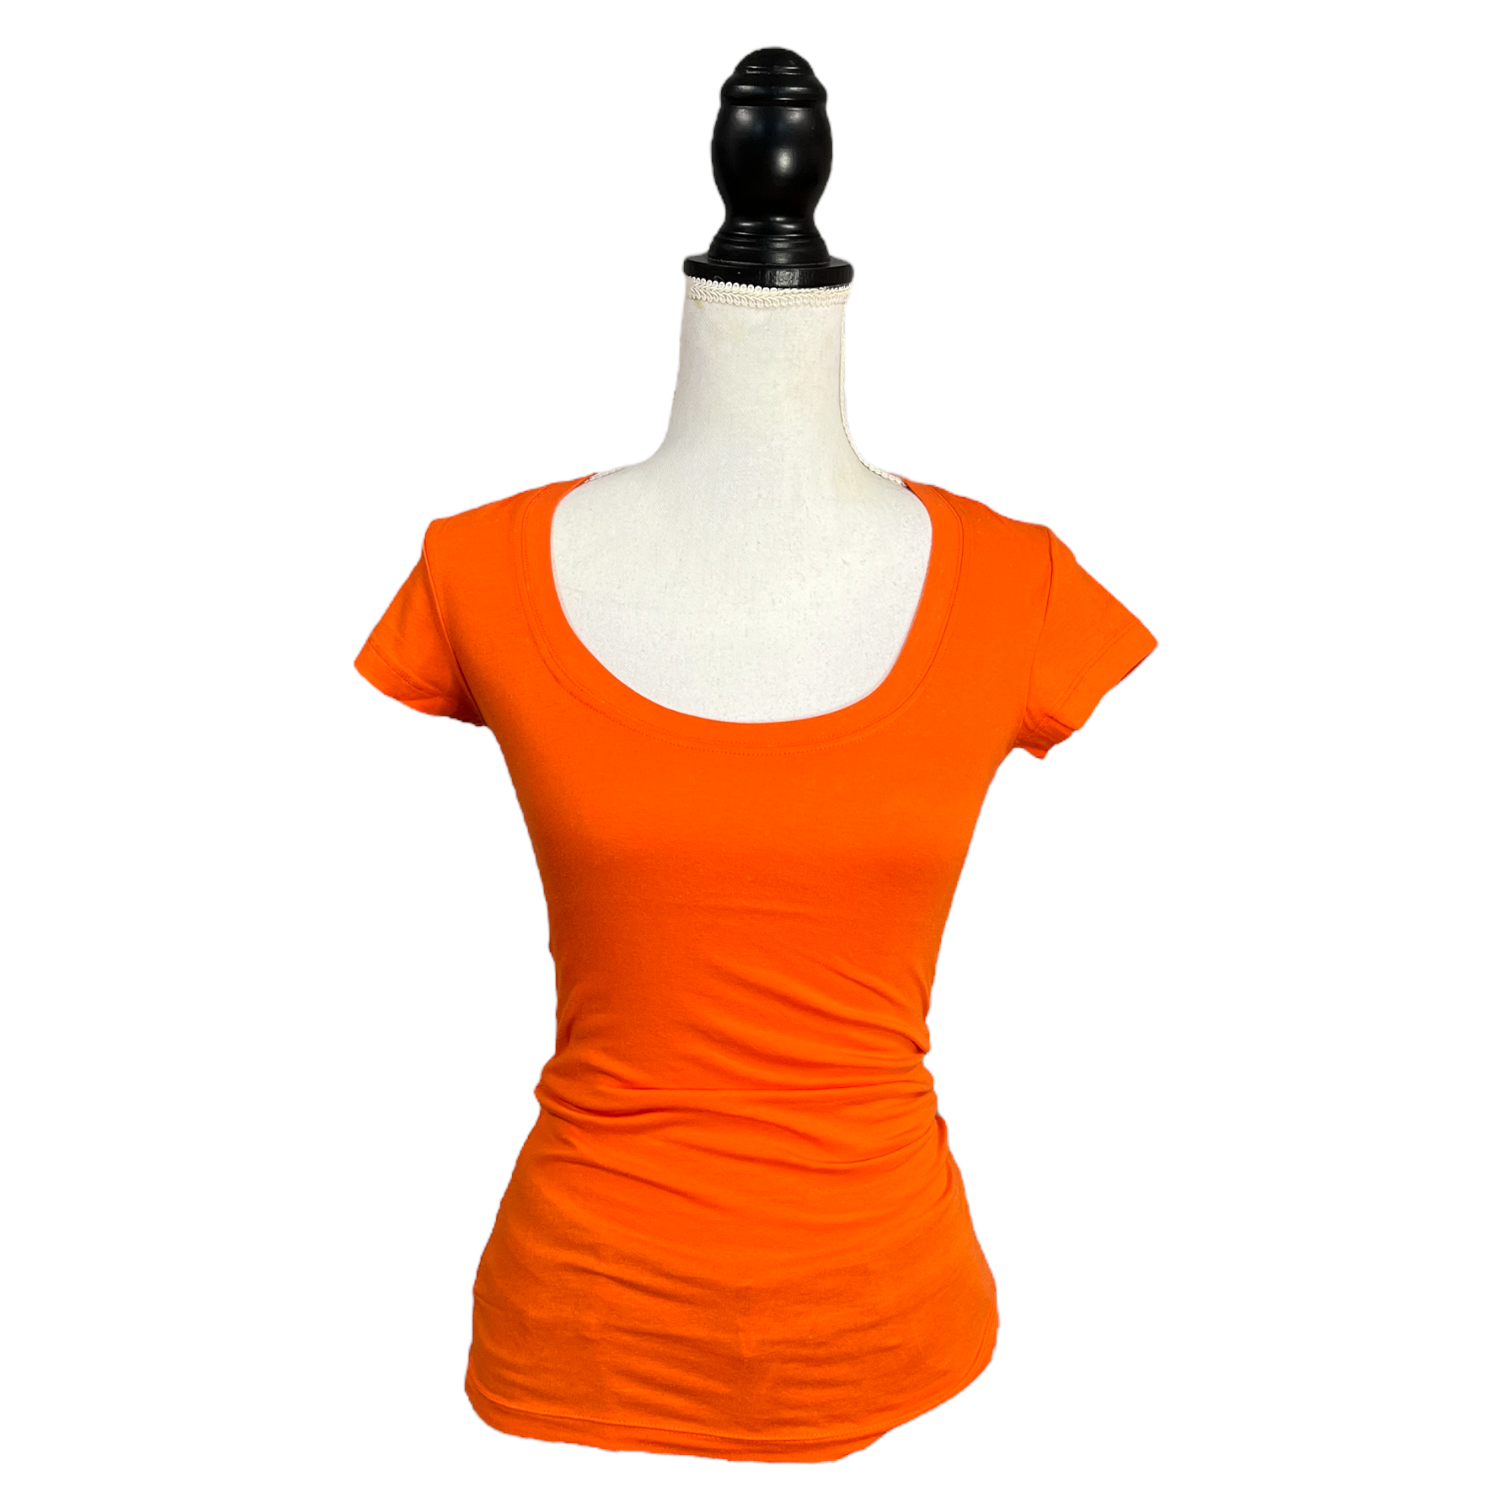 Low Cut Scoop Neck Cleavage Baby Slimming Basic Tee Shirt Orange S/M/L/XL